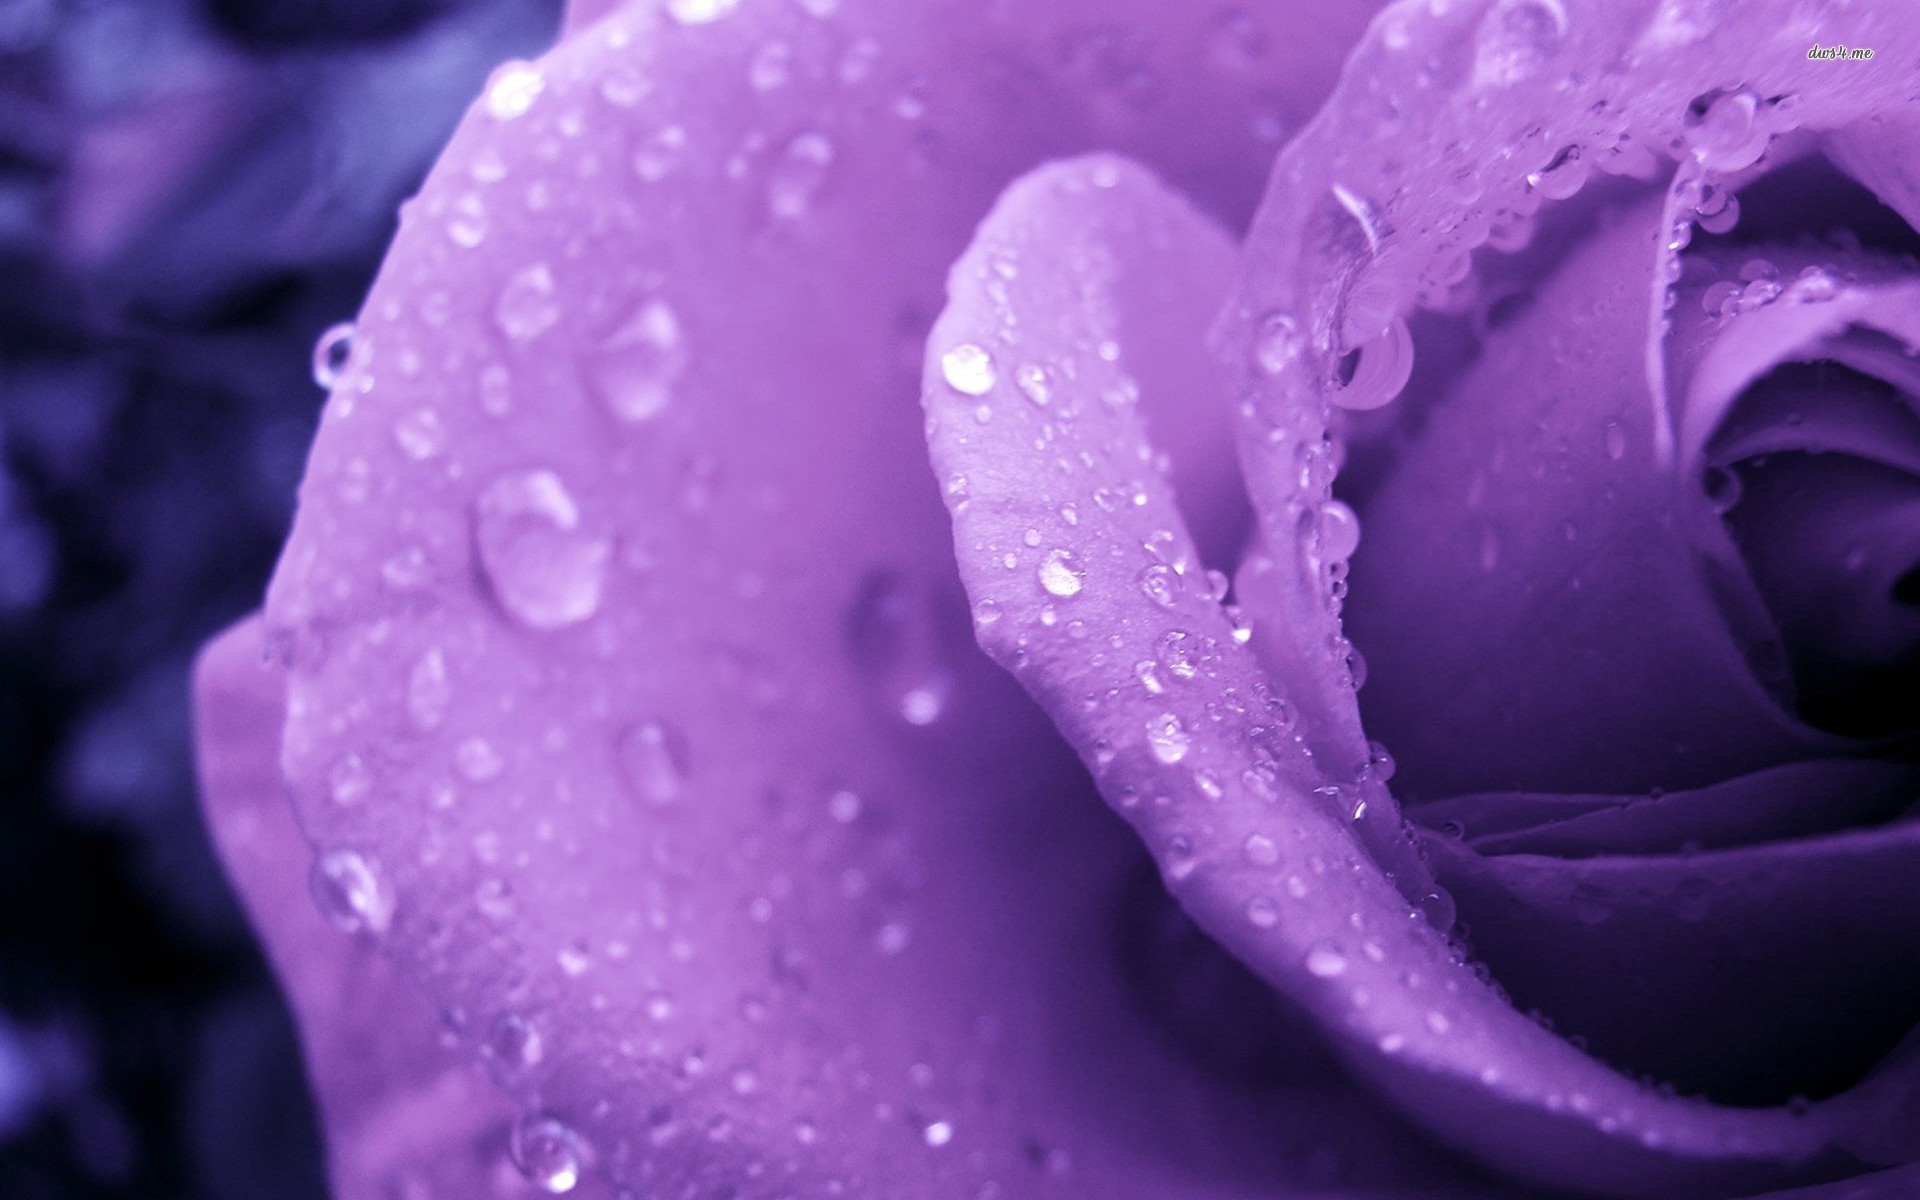 Purple Roses Desktop Background Wallpaper